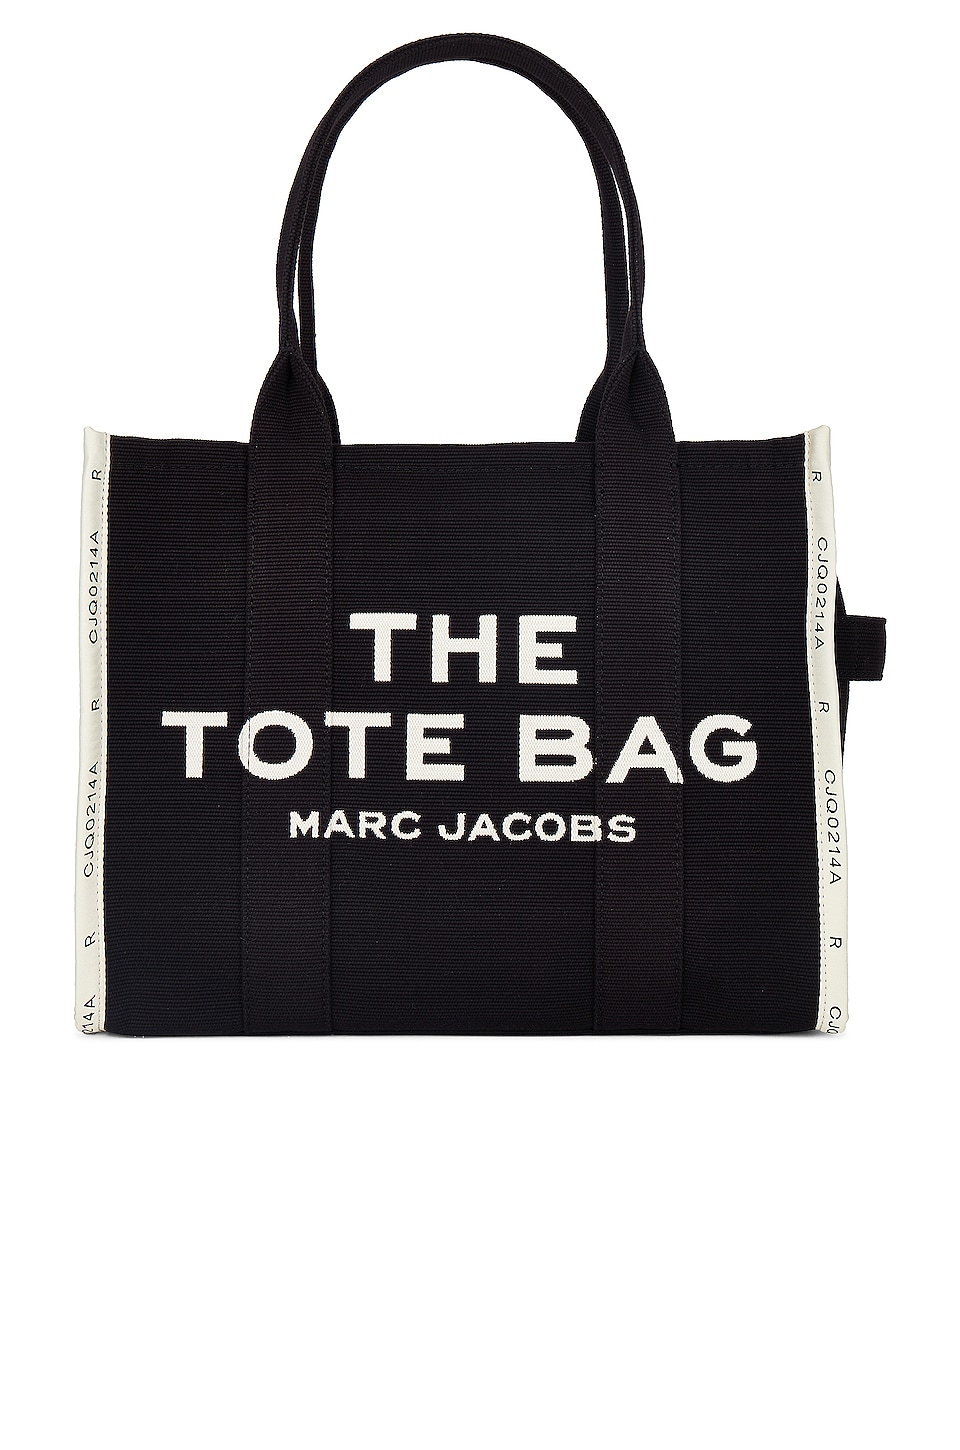 Marc Jacobs Women's The Large Jacquard Tote Bag - Black